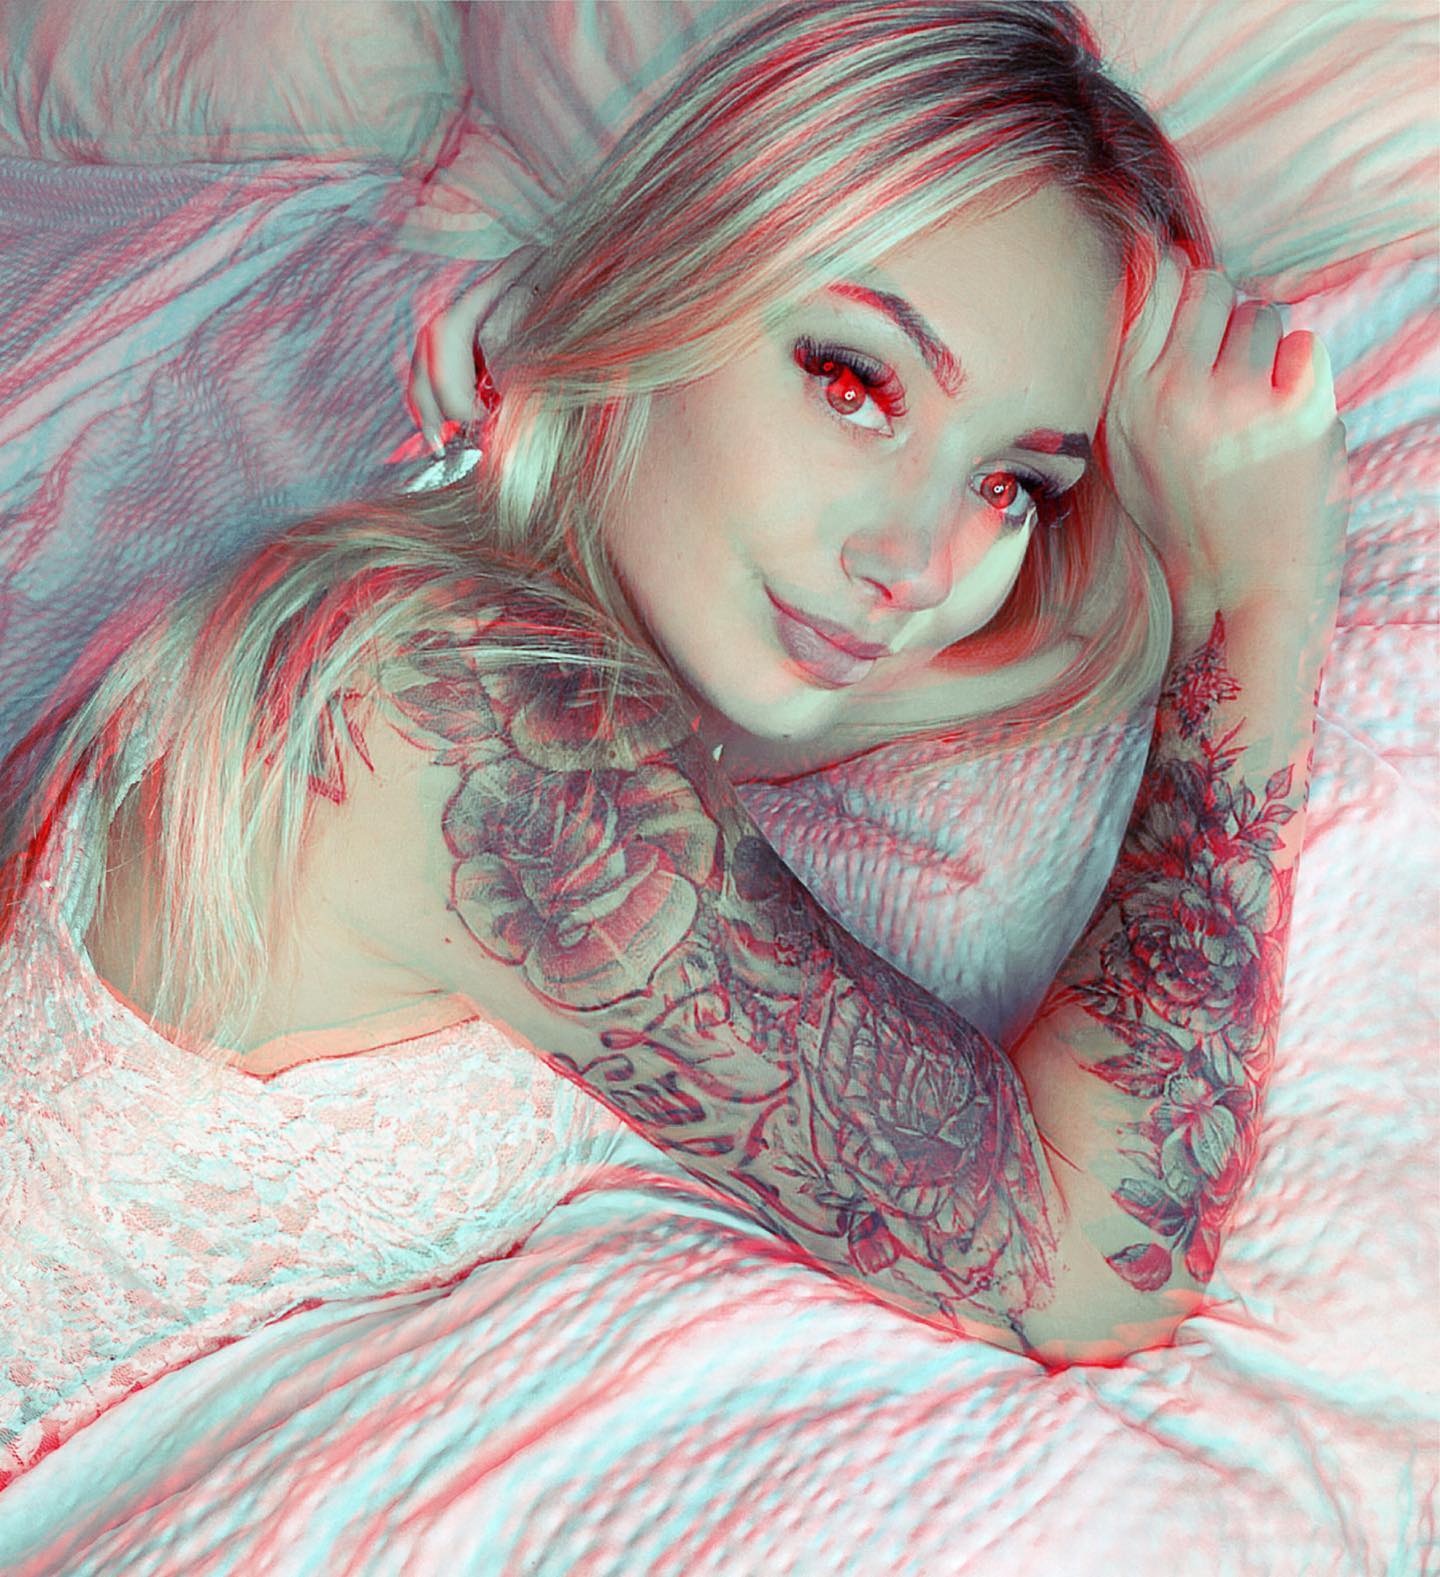 Schönes Wochenende an alle🫶🏼
.
.
.
#me #girl #homesweethome #tattoo #tattoolove #ink #inked #inkedgirl #bedroom #selfie #selfietime #smile #happy #happiness #blonde #blondegirl #longhair #longhairdontcare #love #eyes #ukraniangirl #inklove